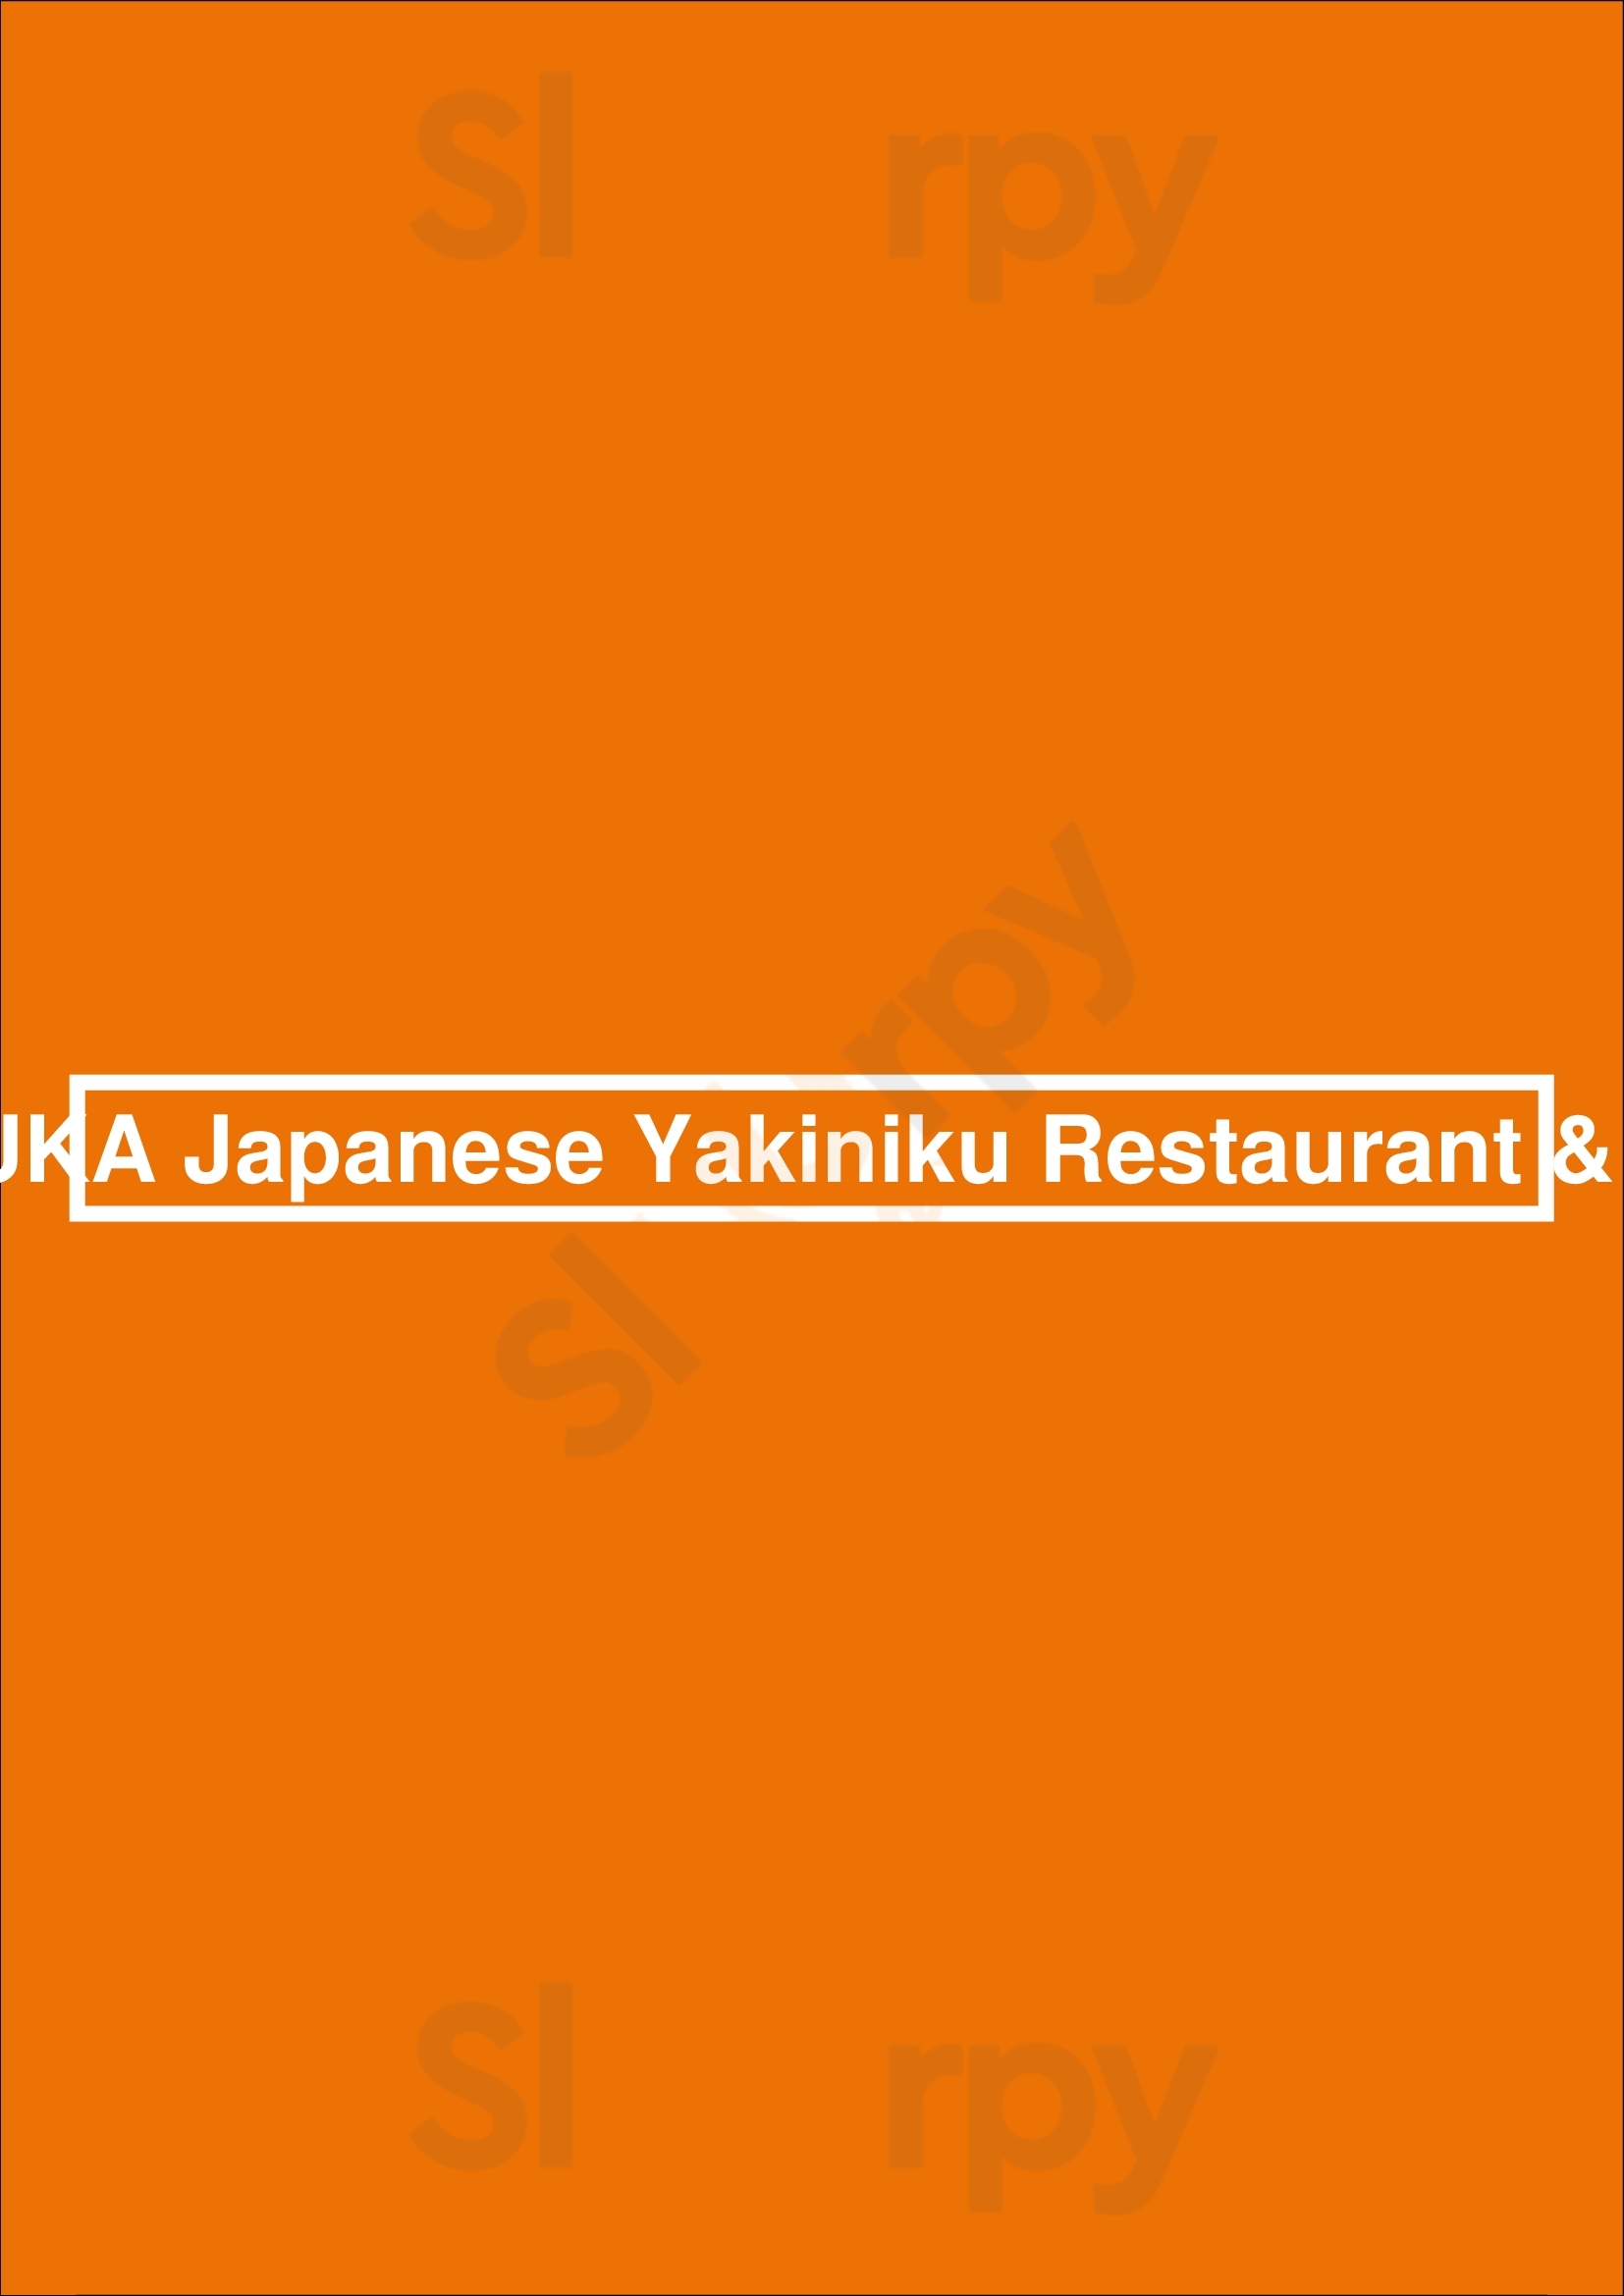 Touka Japanese Yakiniku Restaurant & Bar Parramatta Menu - 1